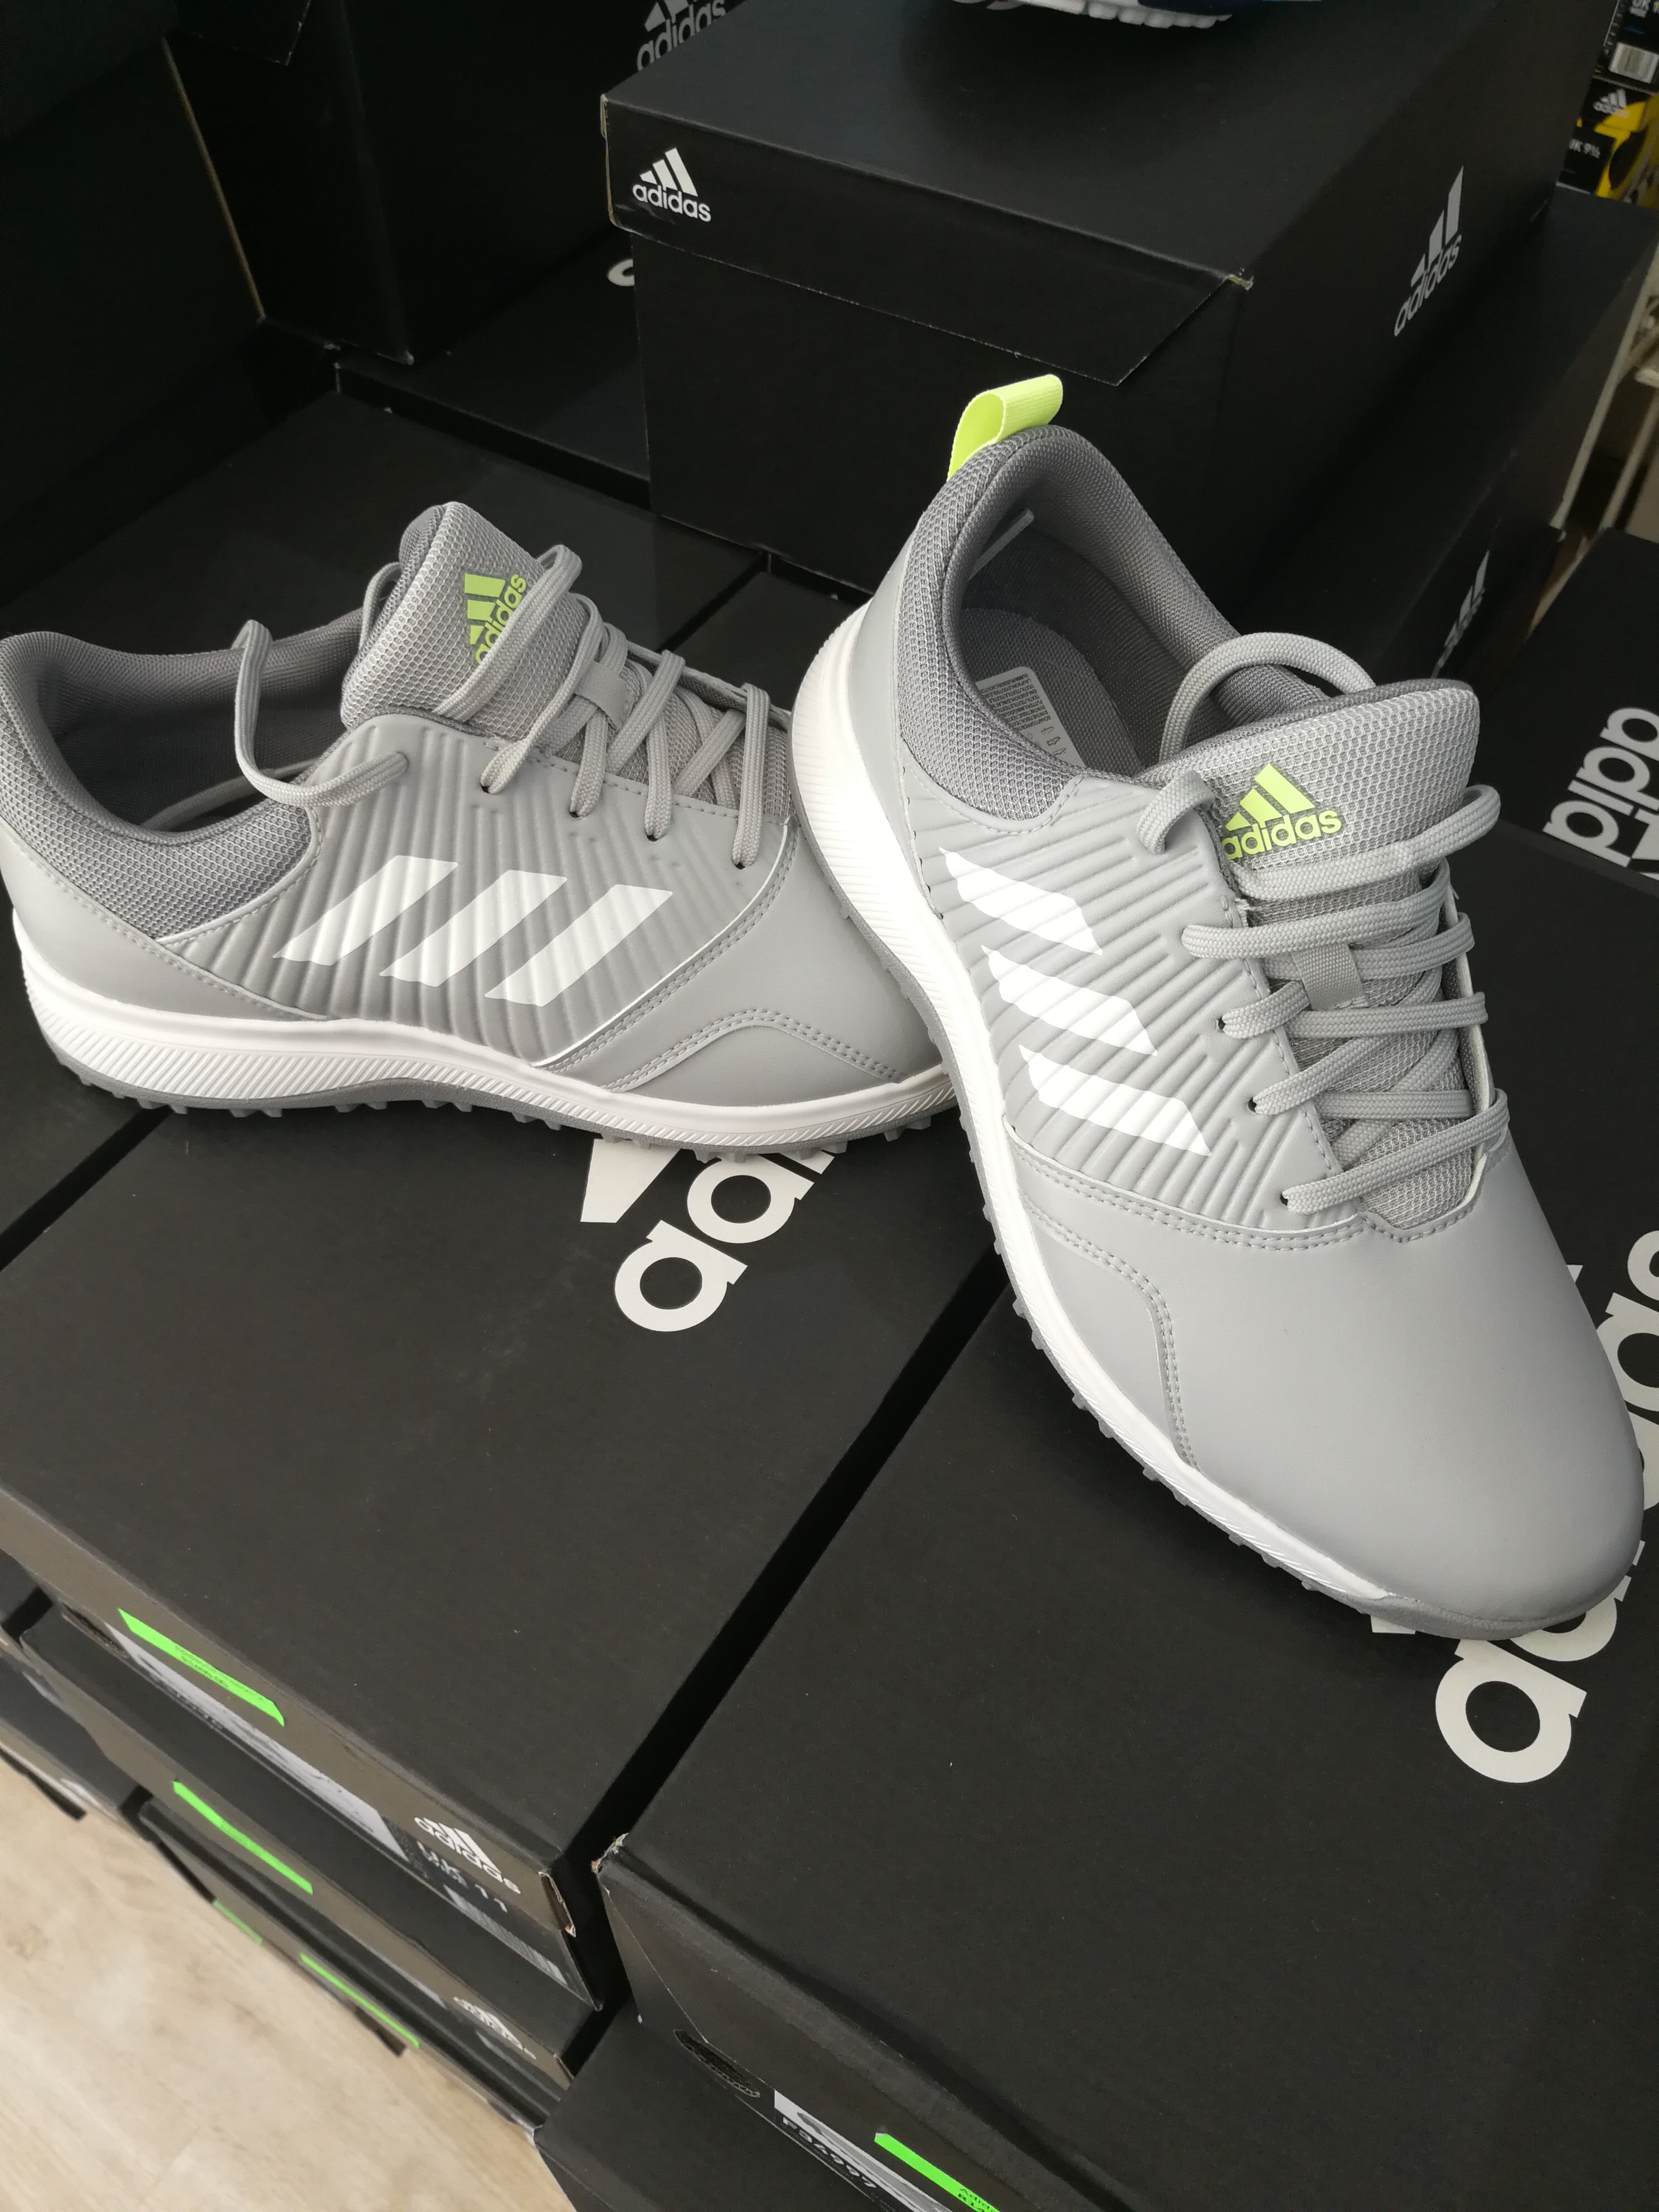 adidas men's cp traxion sl golf shoes